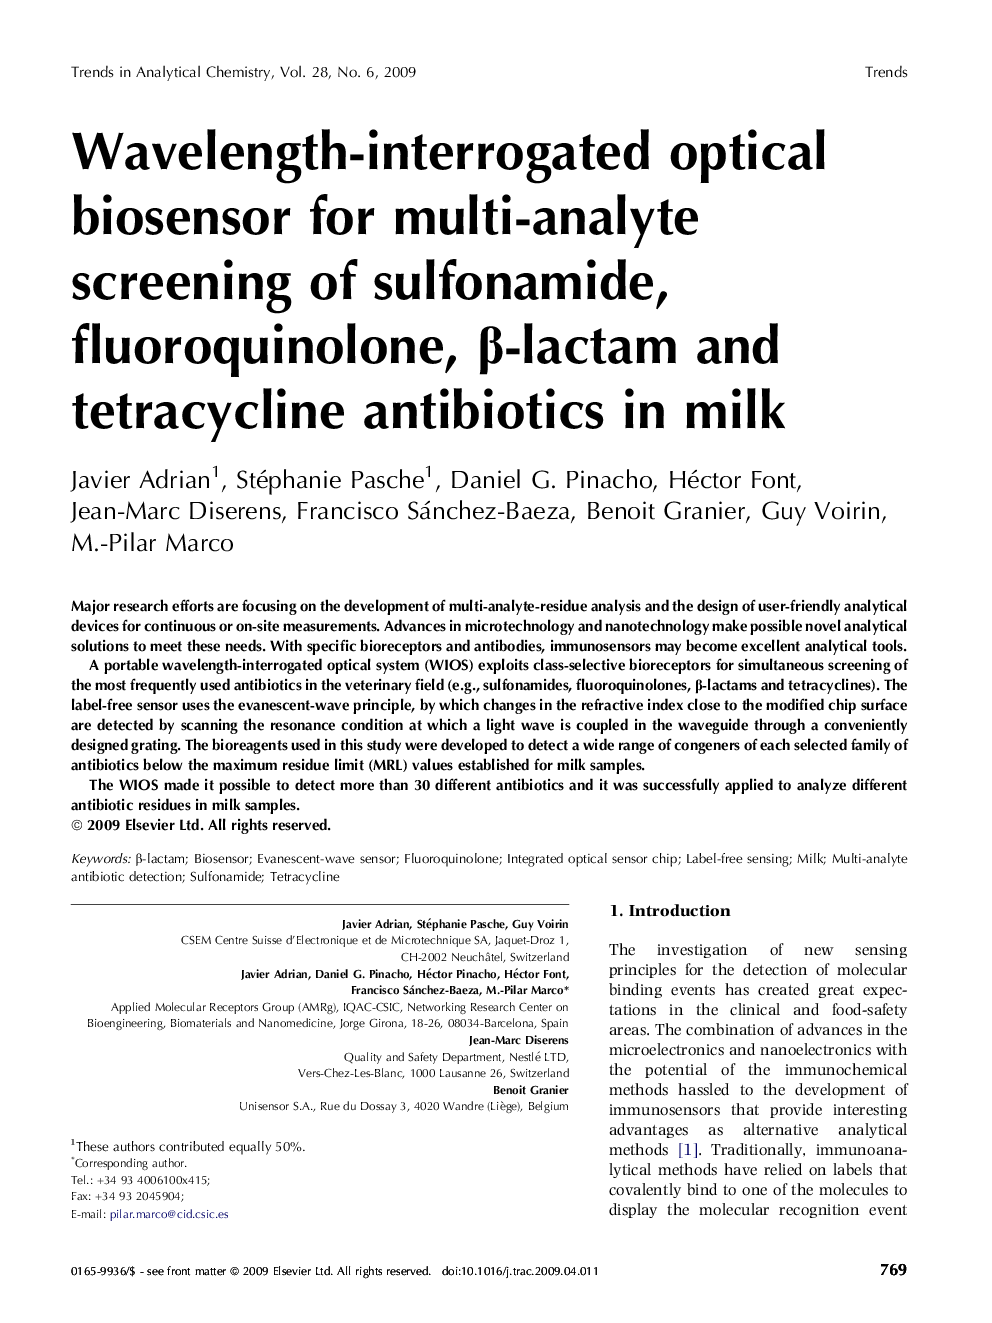 Wavelength-interrogated optical biosensor for multi-analyte screening of sulfonamide, fluoroquinolone, β-lactam and tetracycline antibiotics in milk